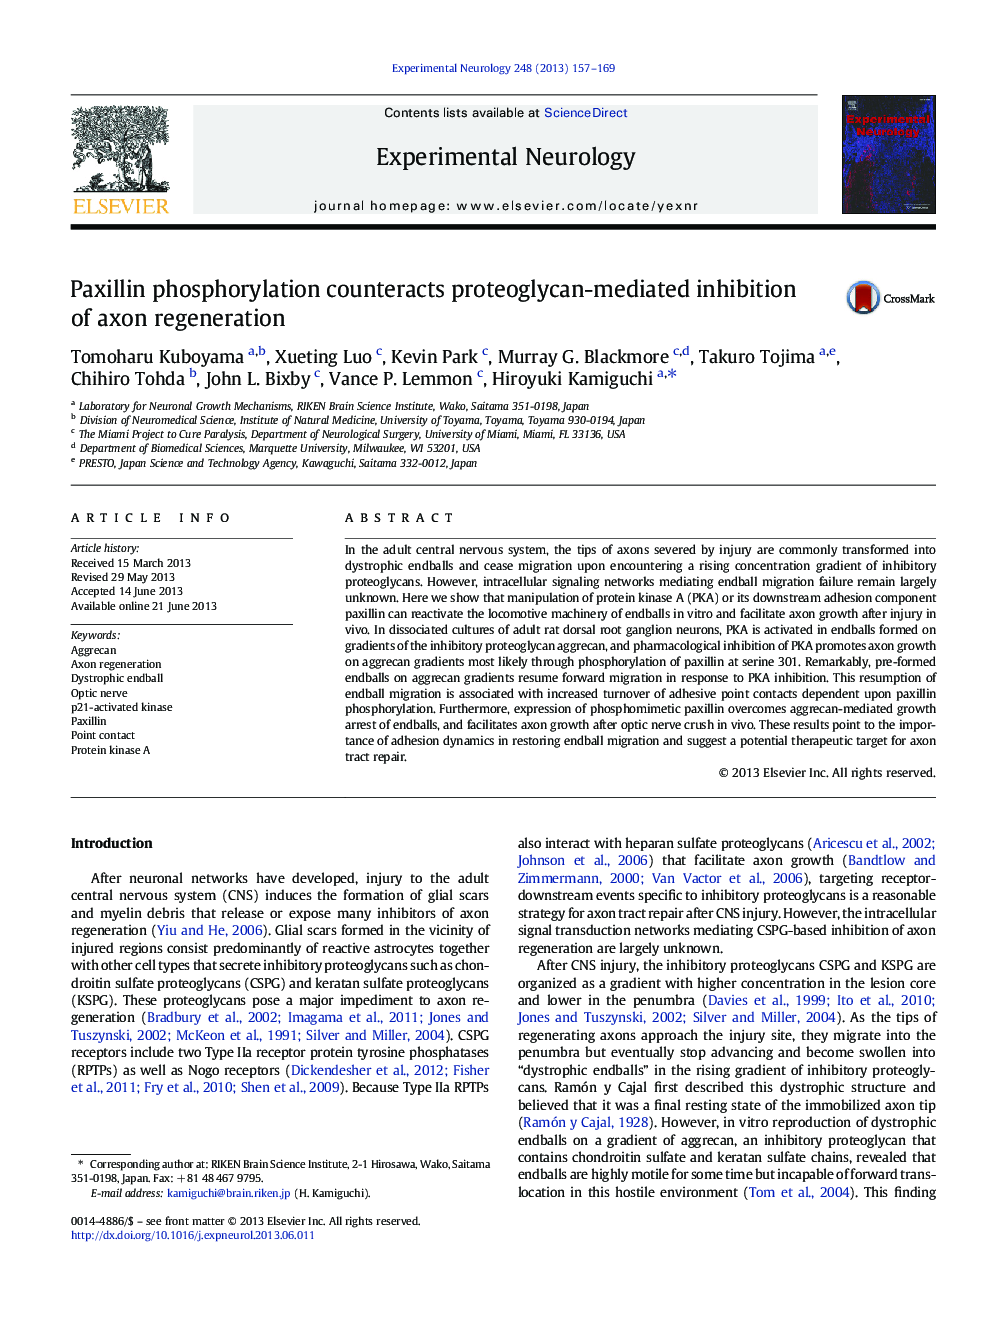 Paxillin phosphorylation counteracts proteoglycan-mediated inhibition of axon regeneration